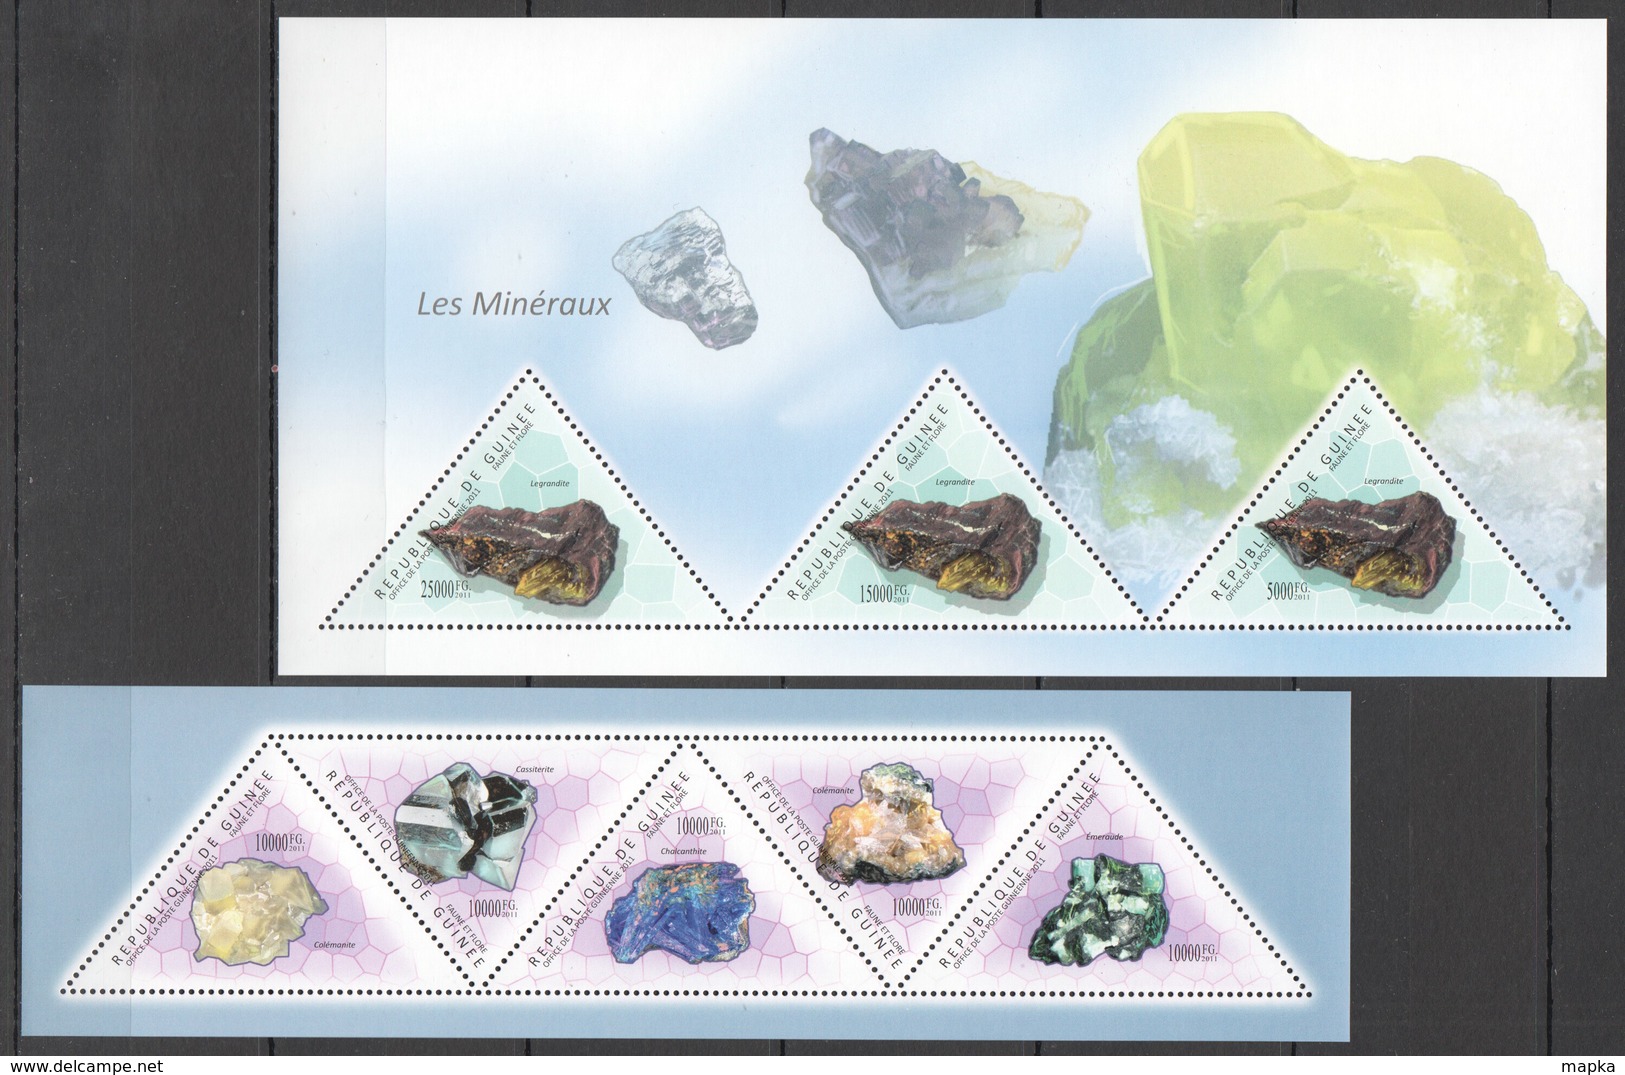 R004 2011 GUINEA NATURE GEOLOGY CRYSTALS MINERALS LES MINERAUX 2KB MNH - Minerals